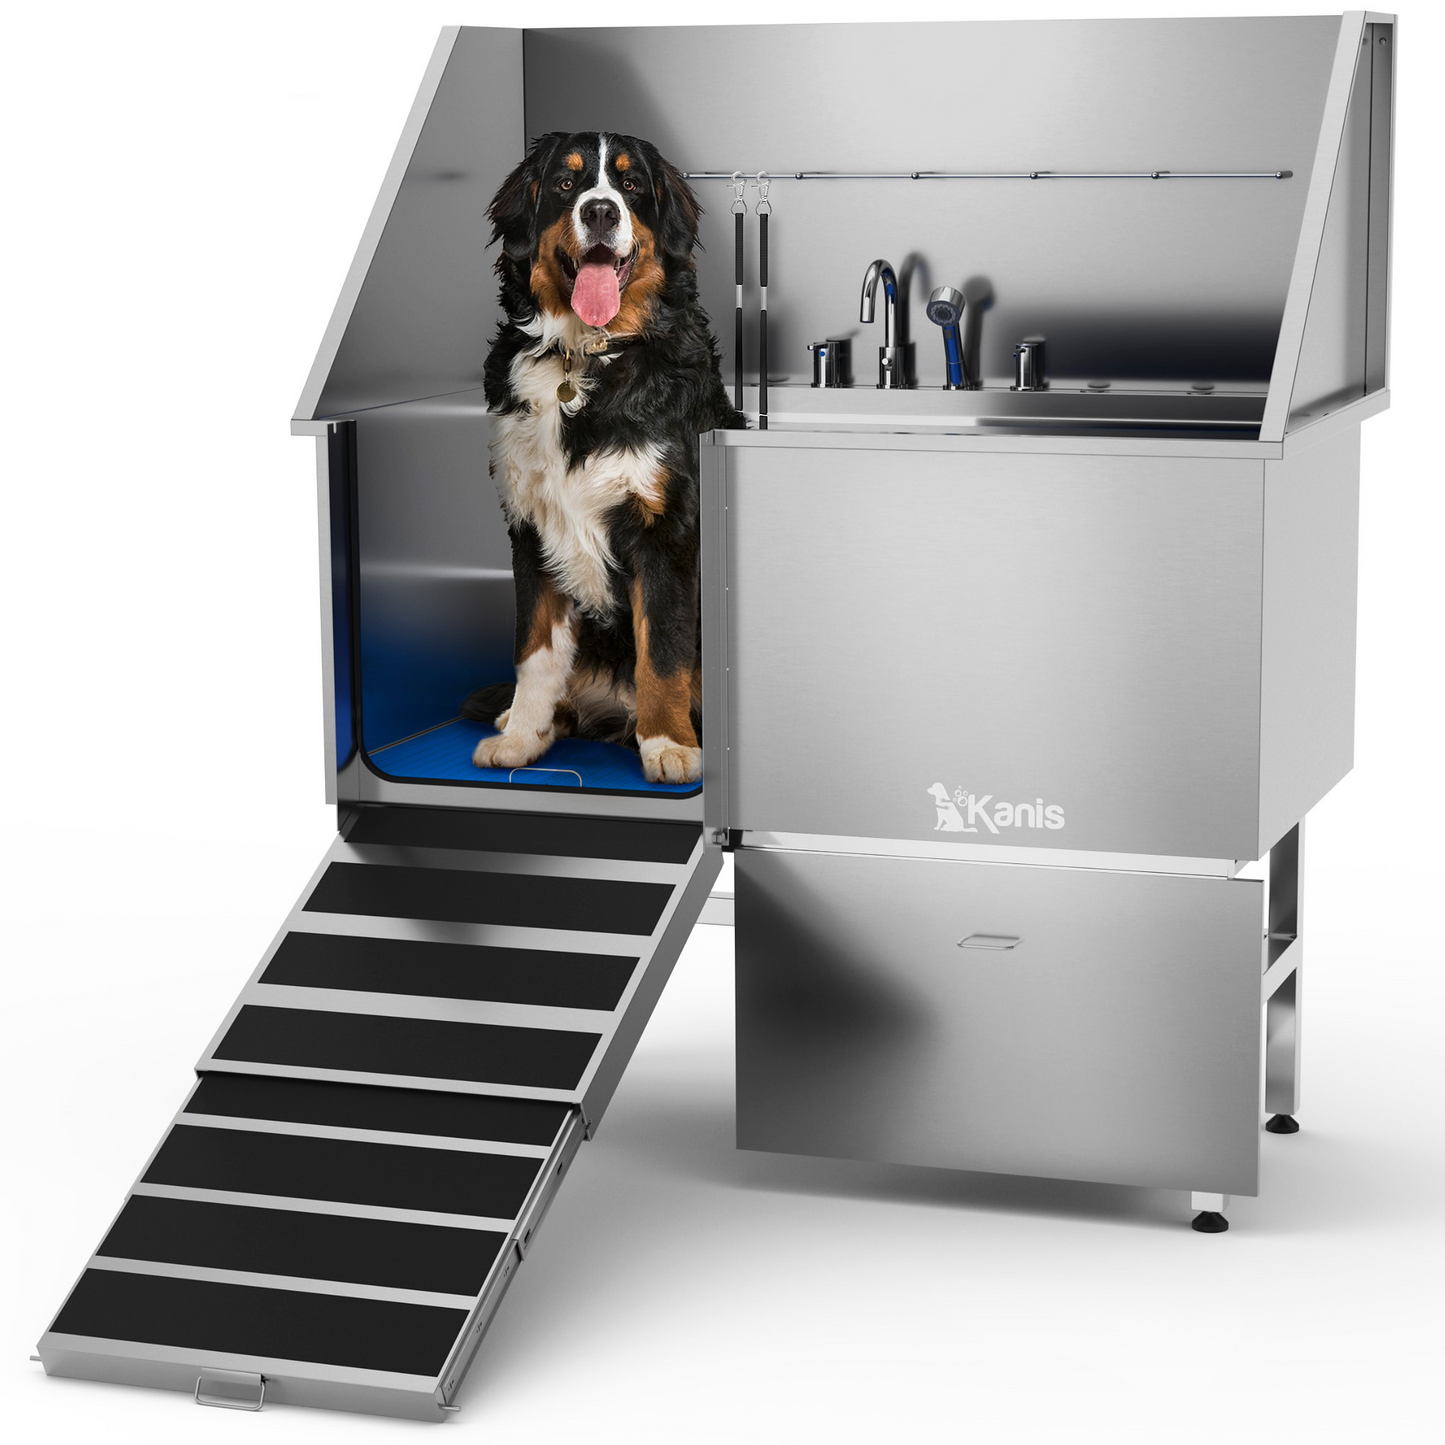 KANIS 50 Professional Stainless Steel Dog Bathing Station - Dog Groom